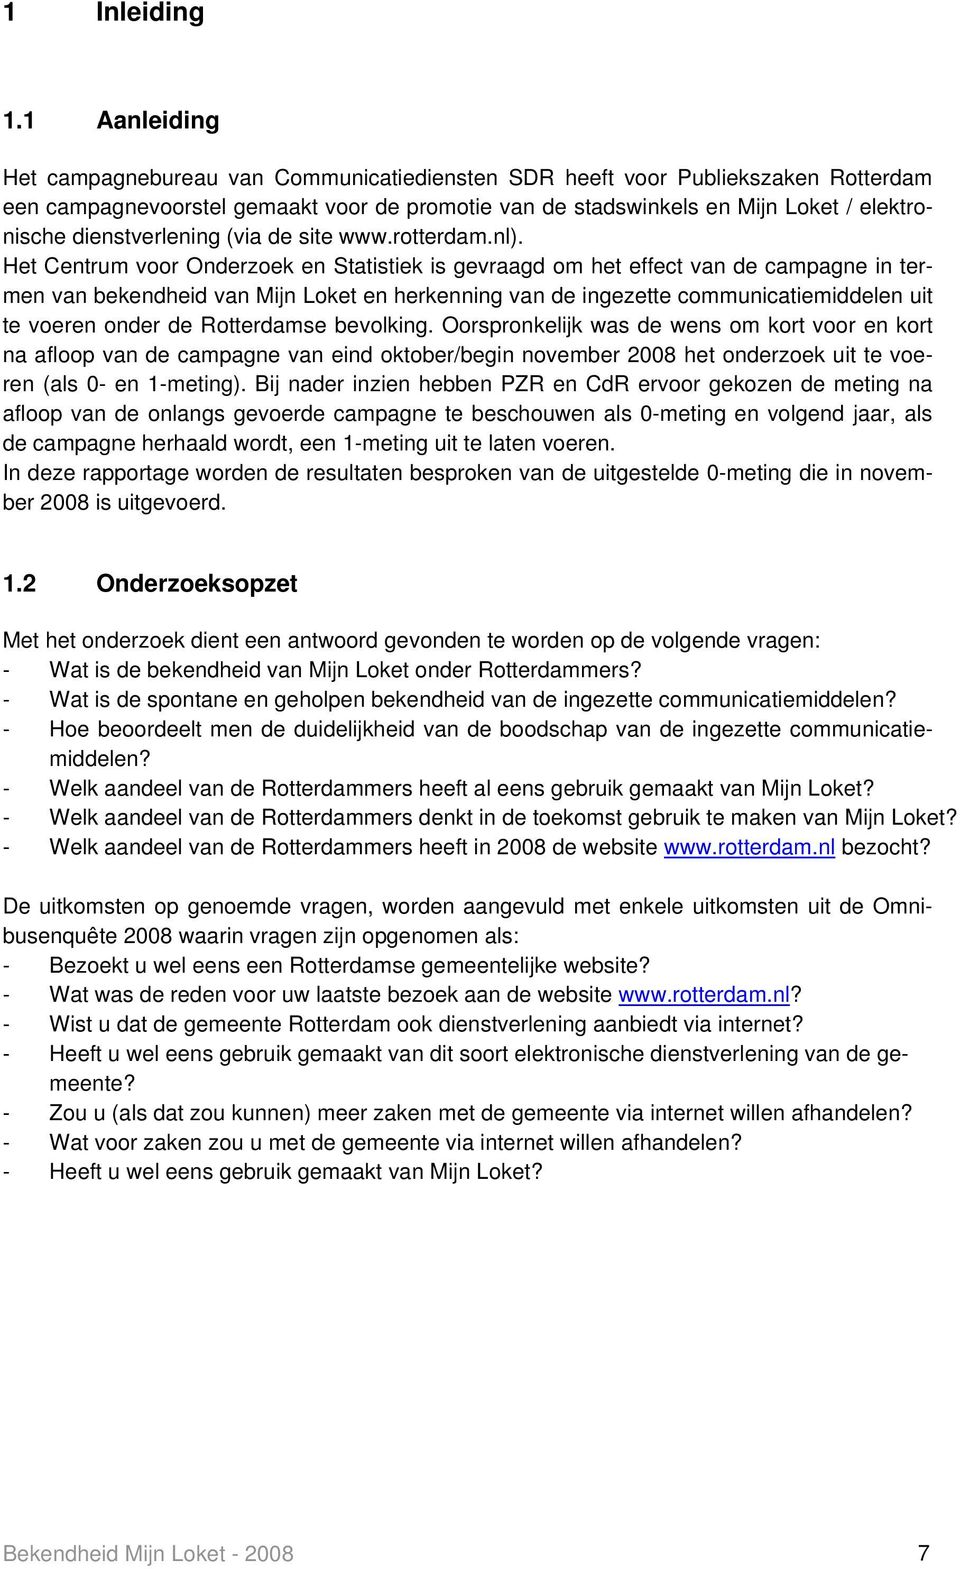 dienstverlening (via de site www.rotterdam.nl).